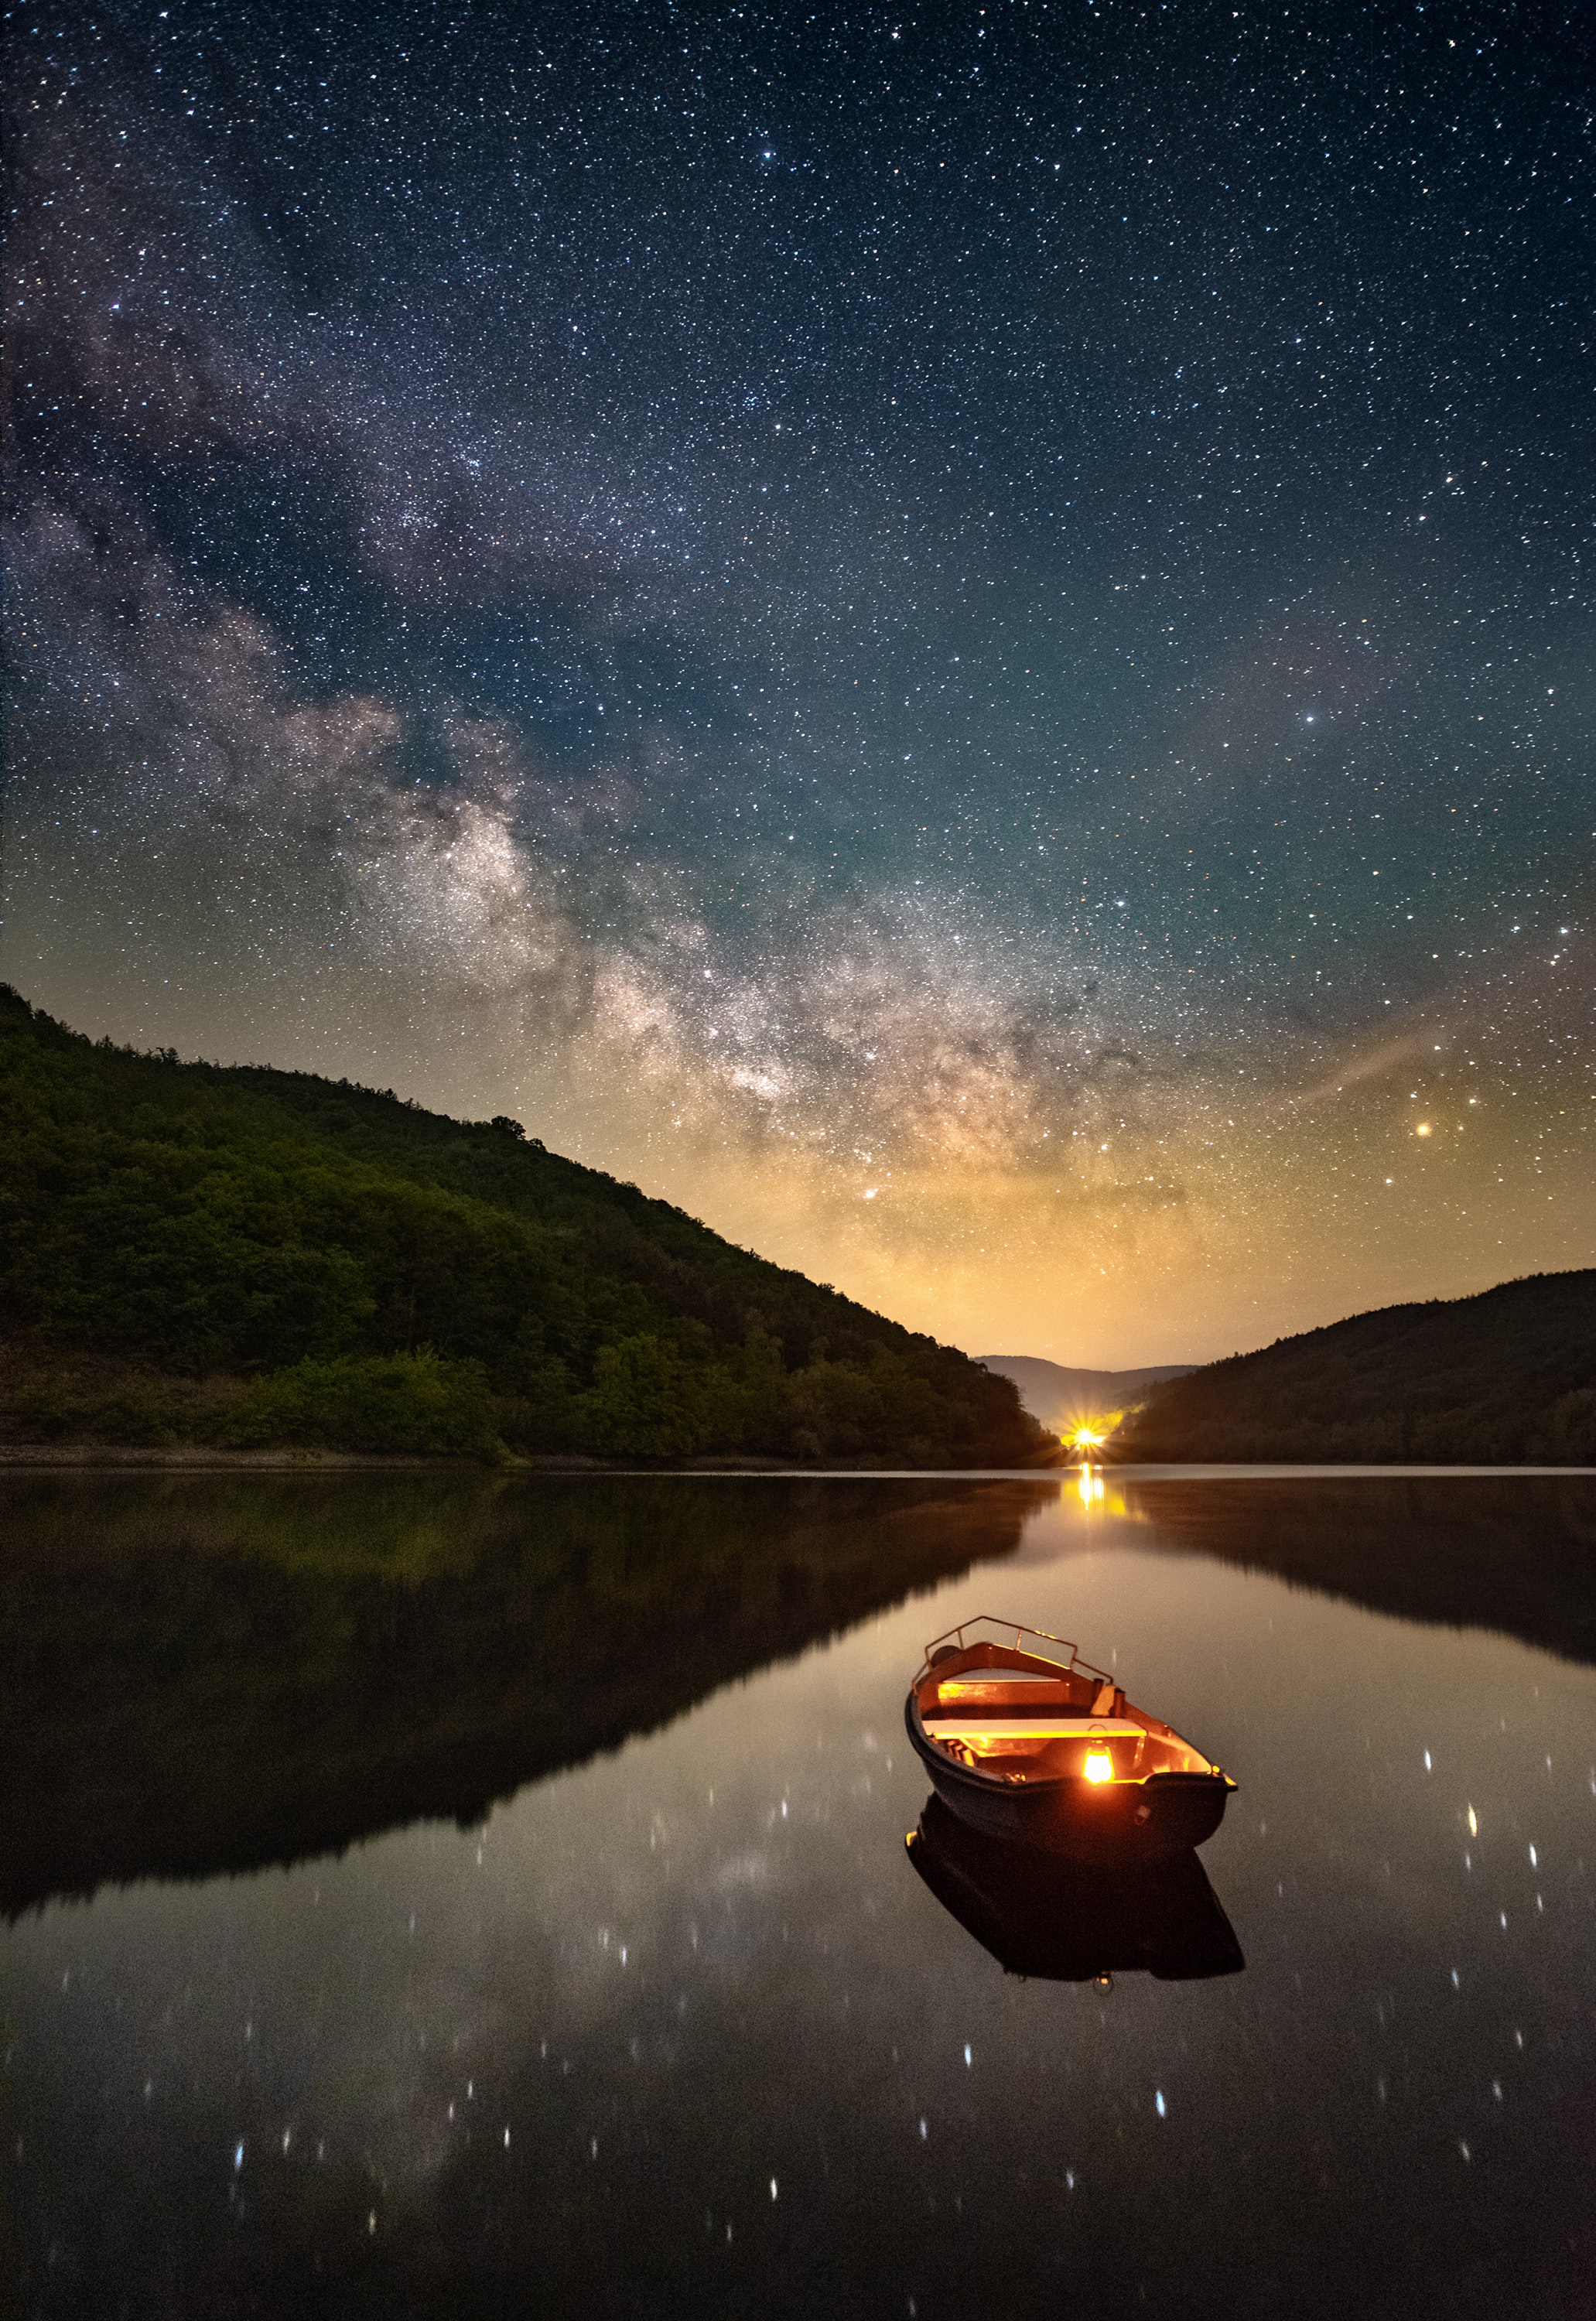 lantern, boat, lamp, nature, reflection, starry sky